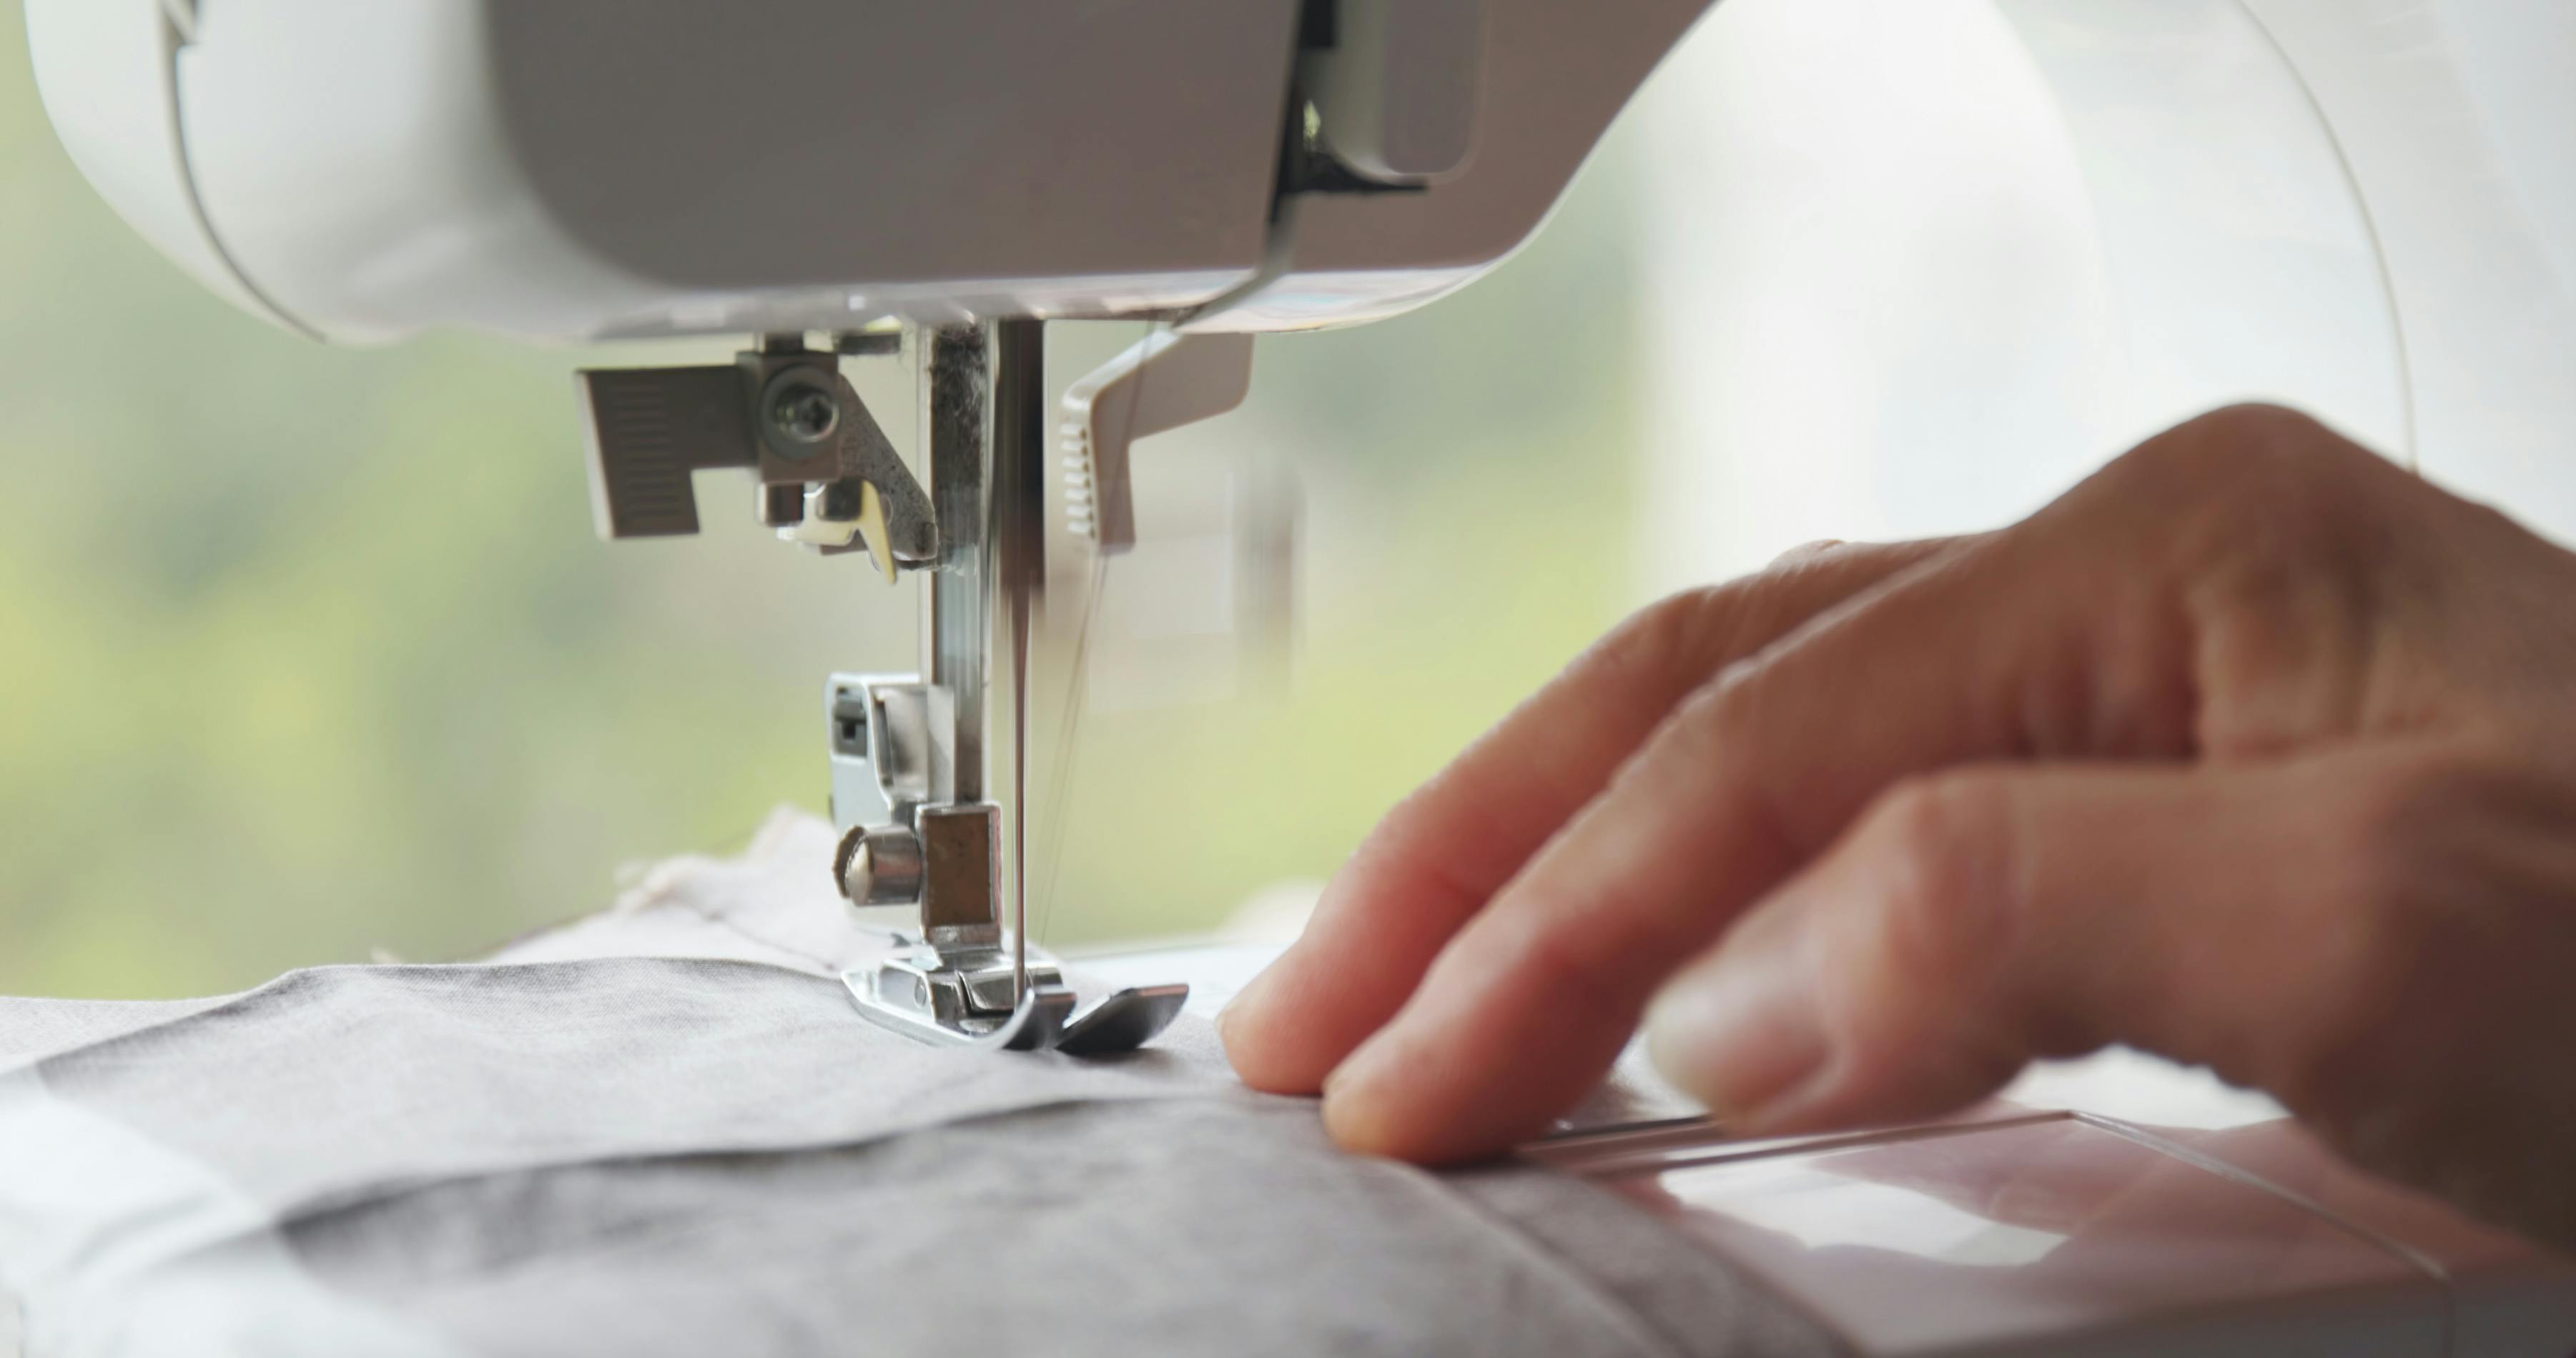  hand guiding fabric through sewing machine